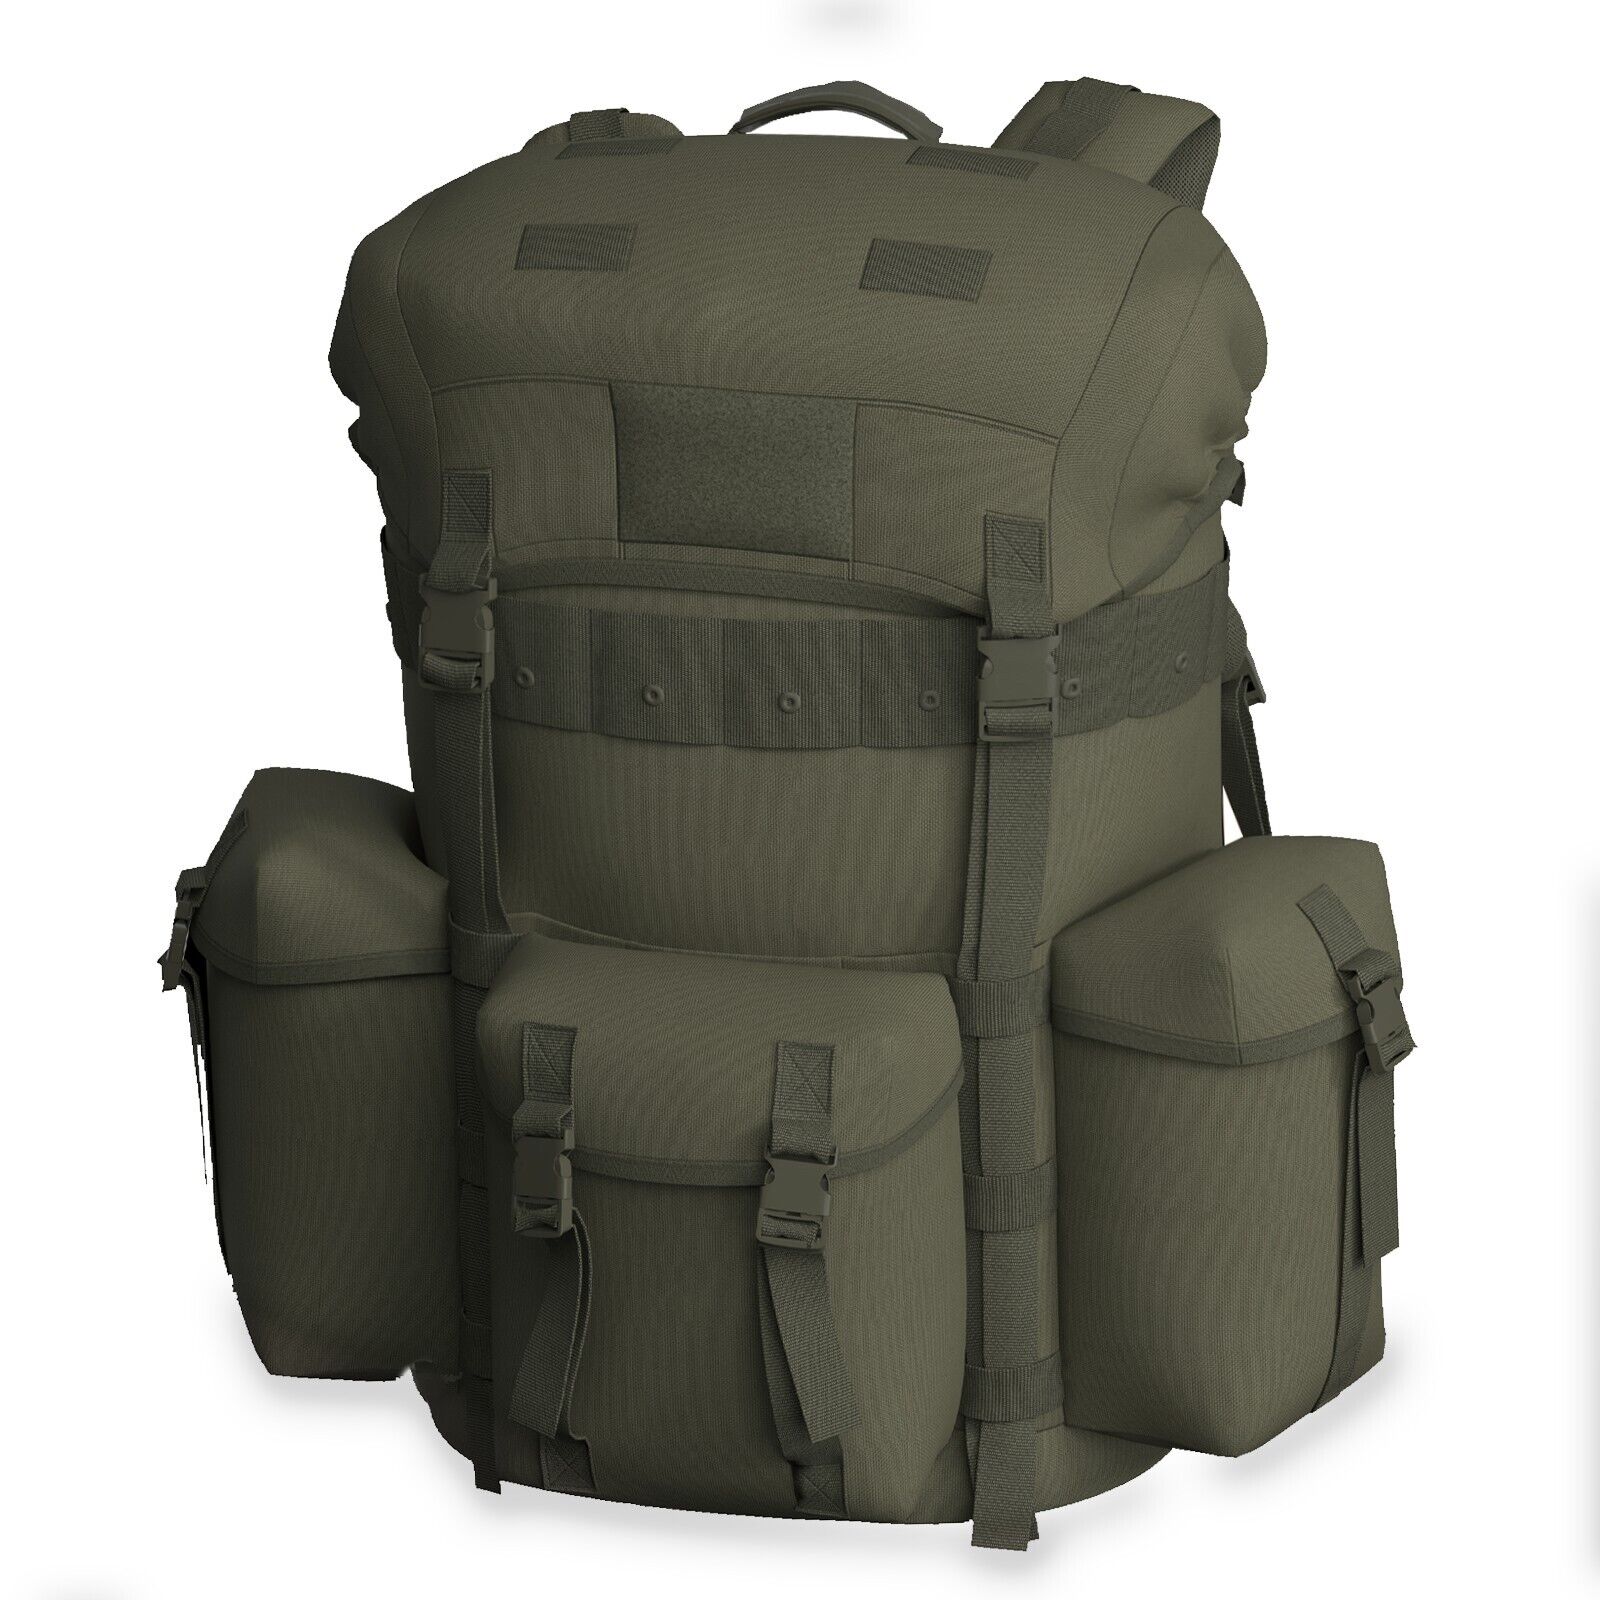 MT ALICE Pack Internal frame Army Survival Combat Rucksack Backpack Ranger Green